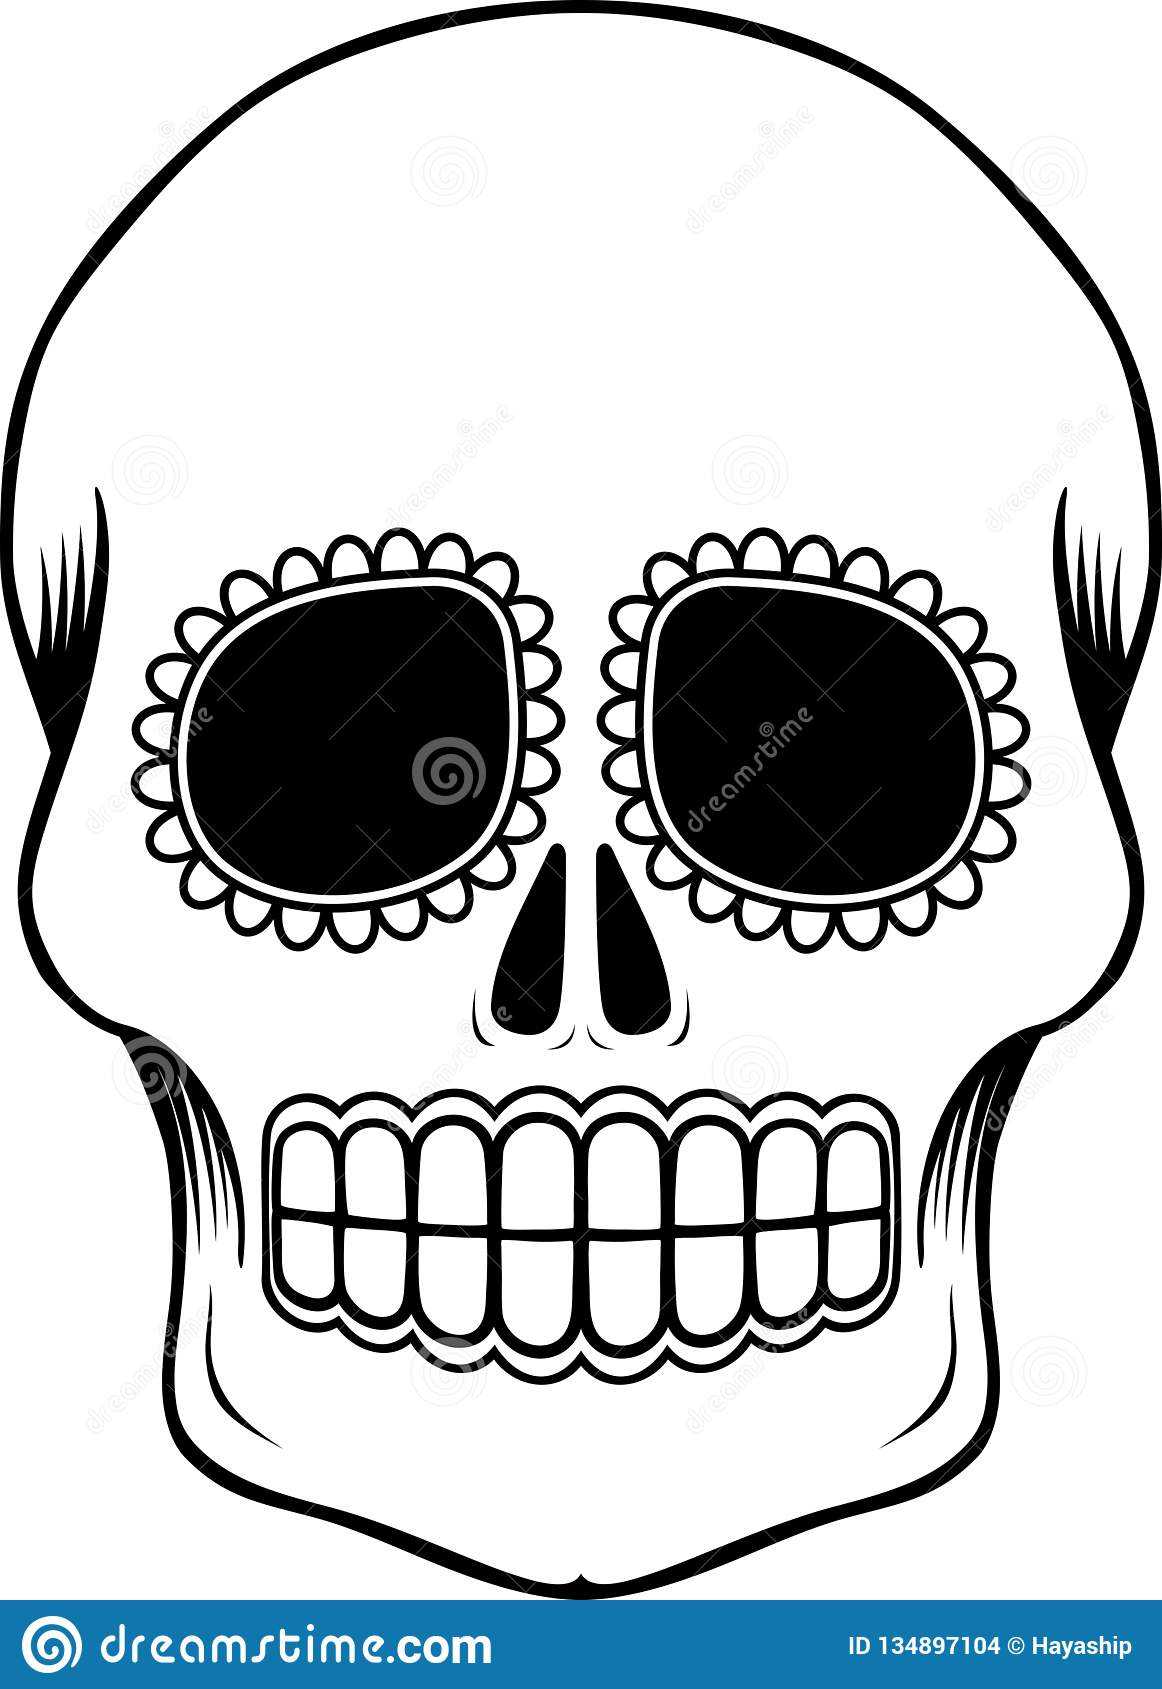 Mexican Sugar Skull Template Stock Vector – Illustration Of For Blank Sugar Skull Template